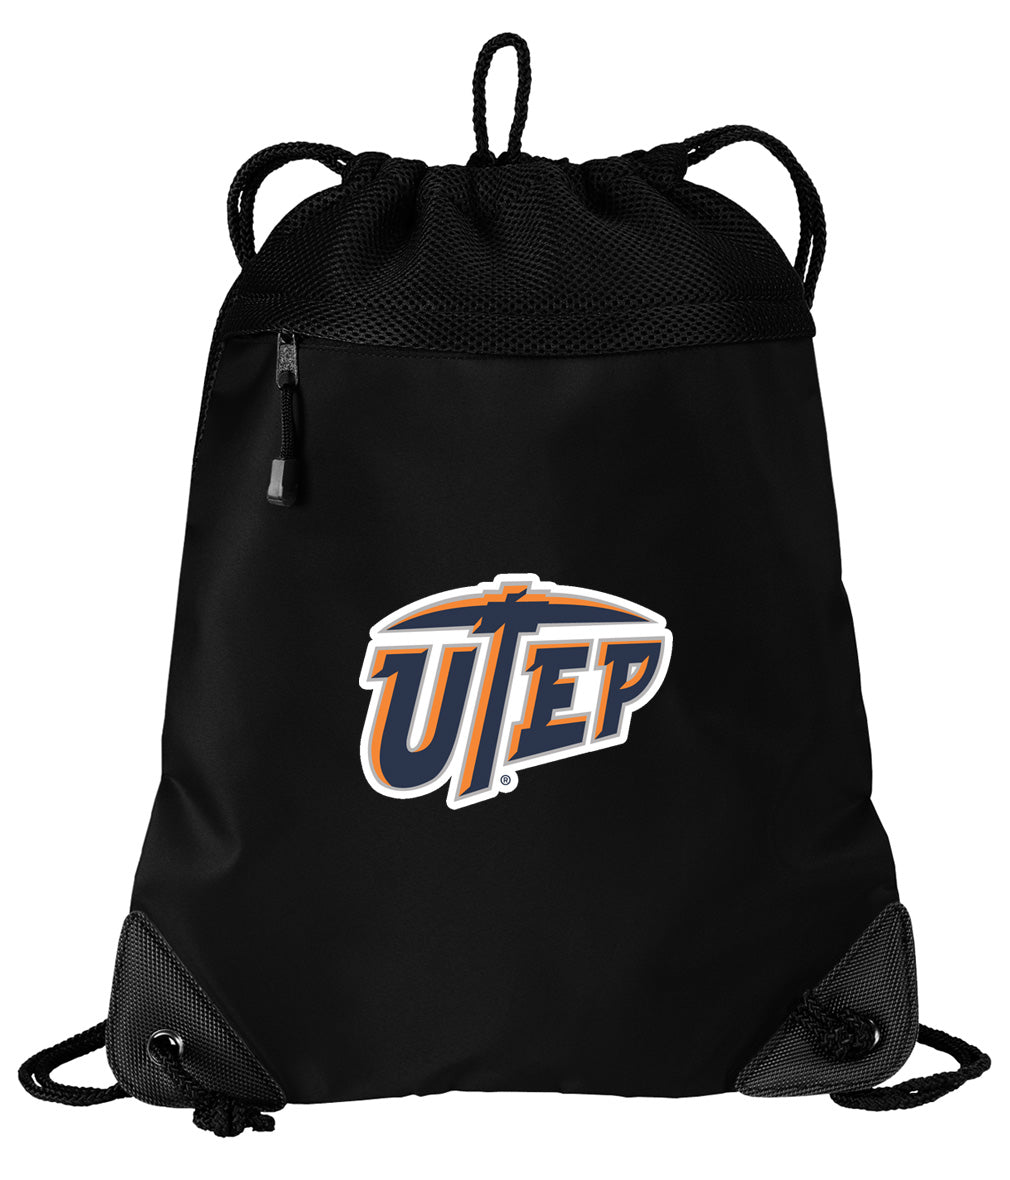 UTEP Drawstring Backpack University of Texas El Paso Cinch Pack - Mesh & Microfiber